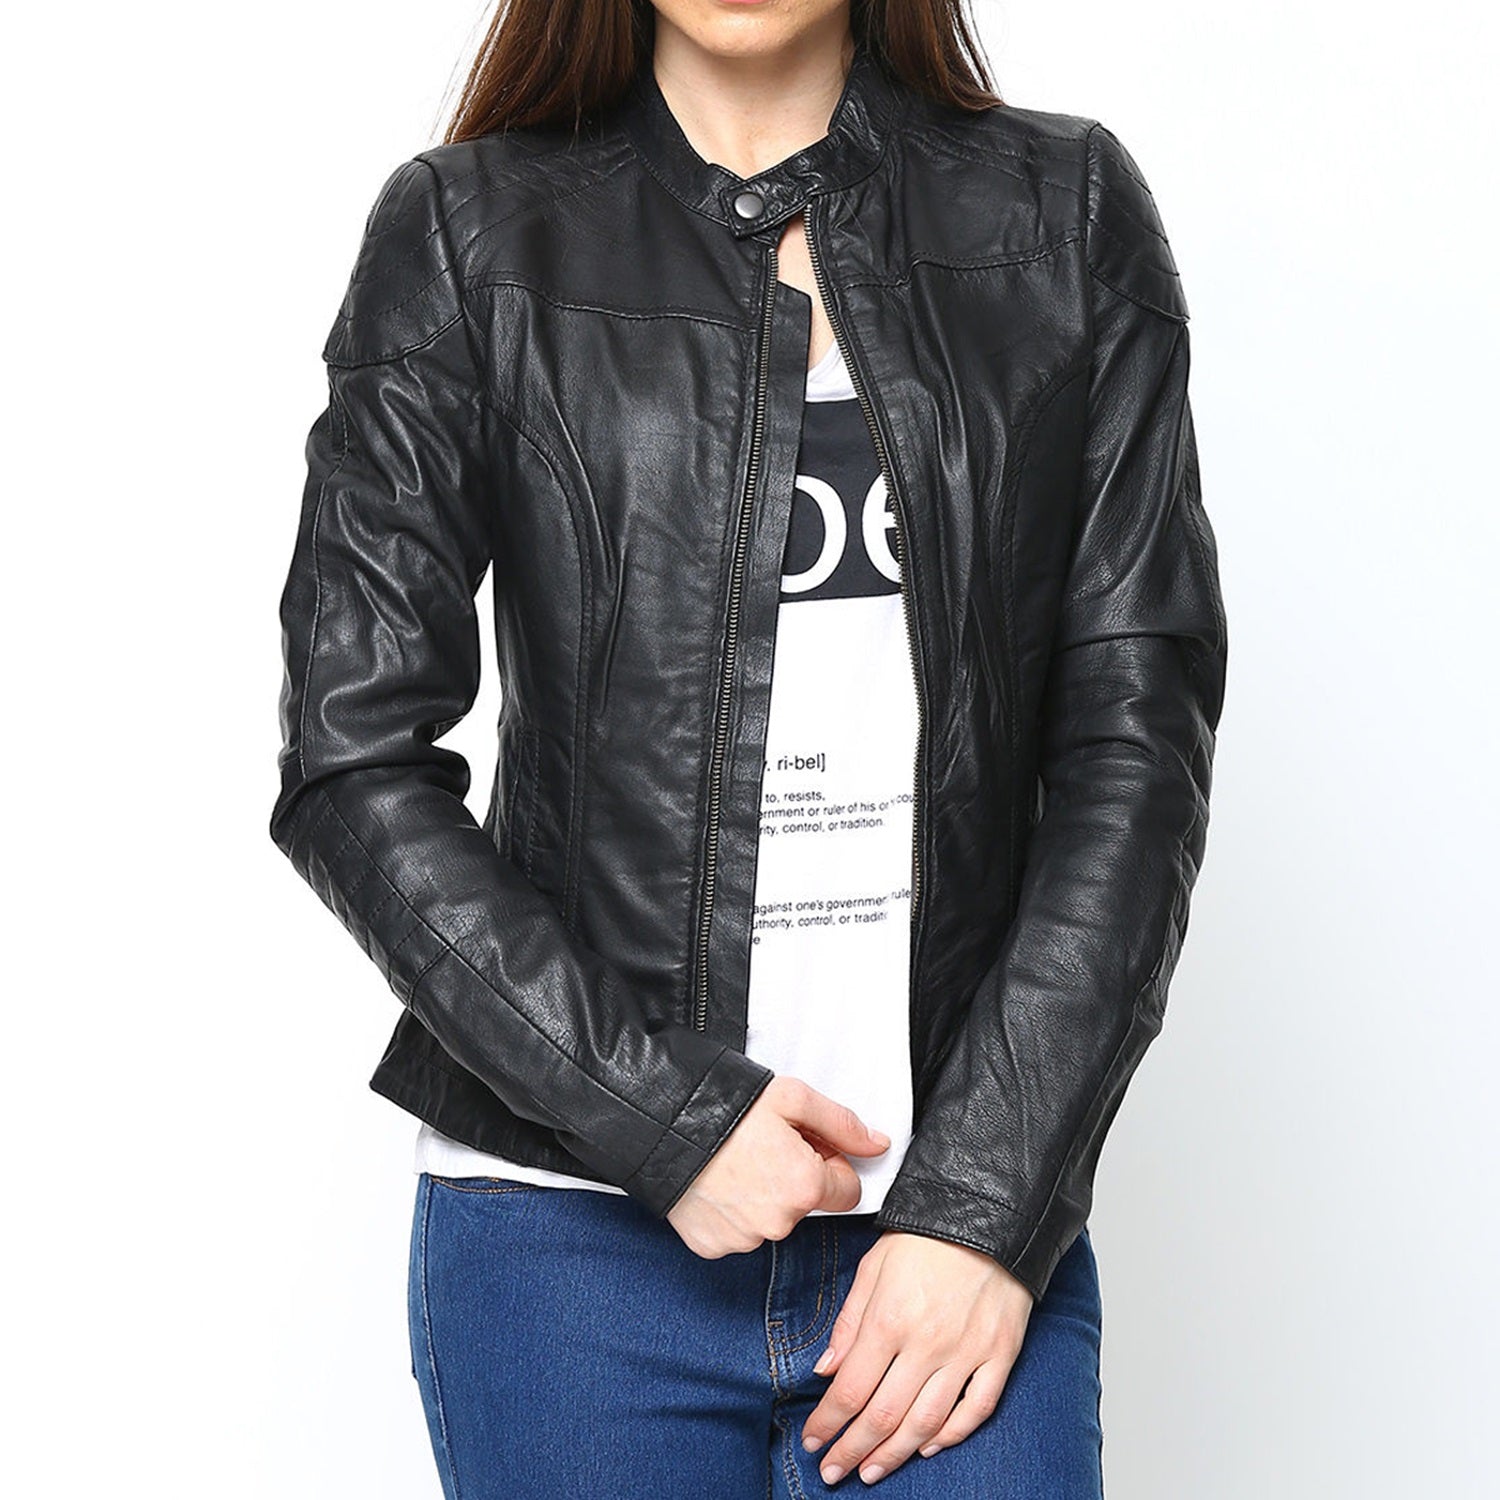 Black Leather Ladies Jacket With Zipper Closure